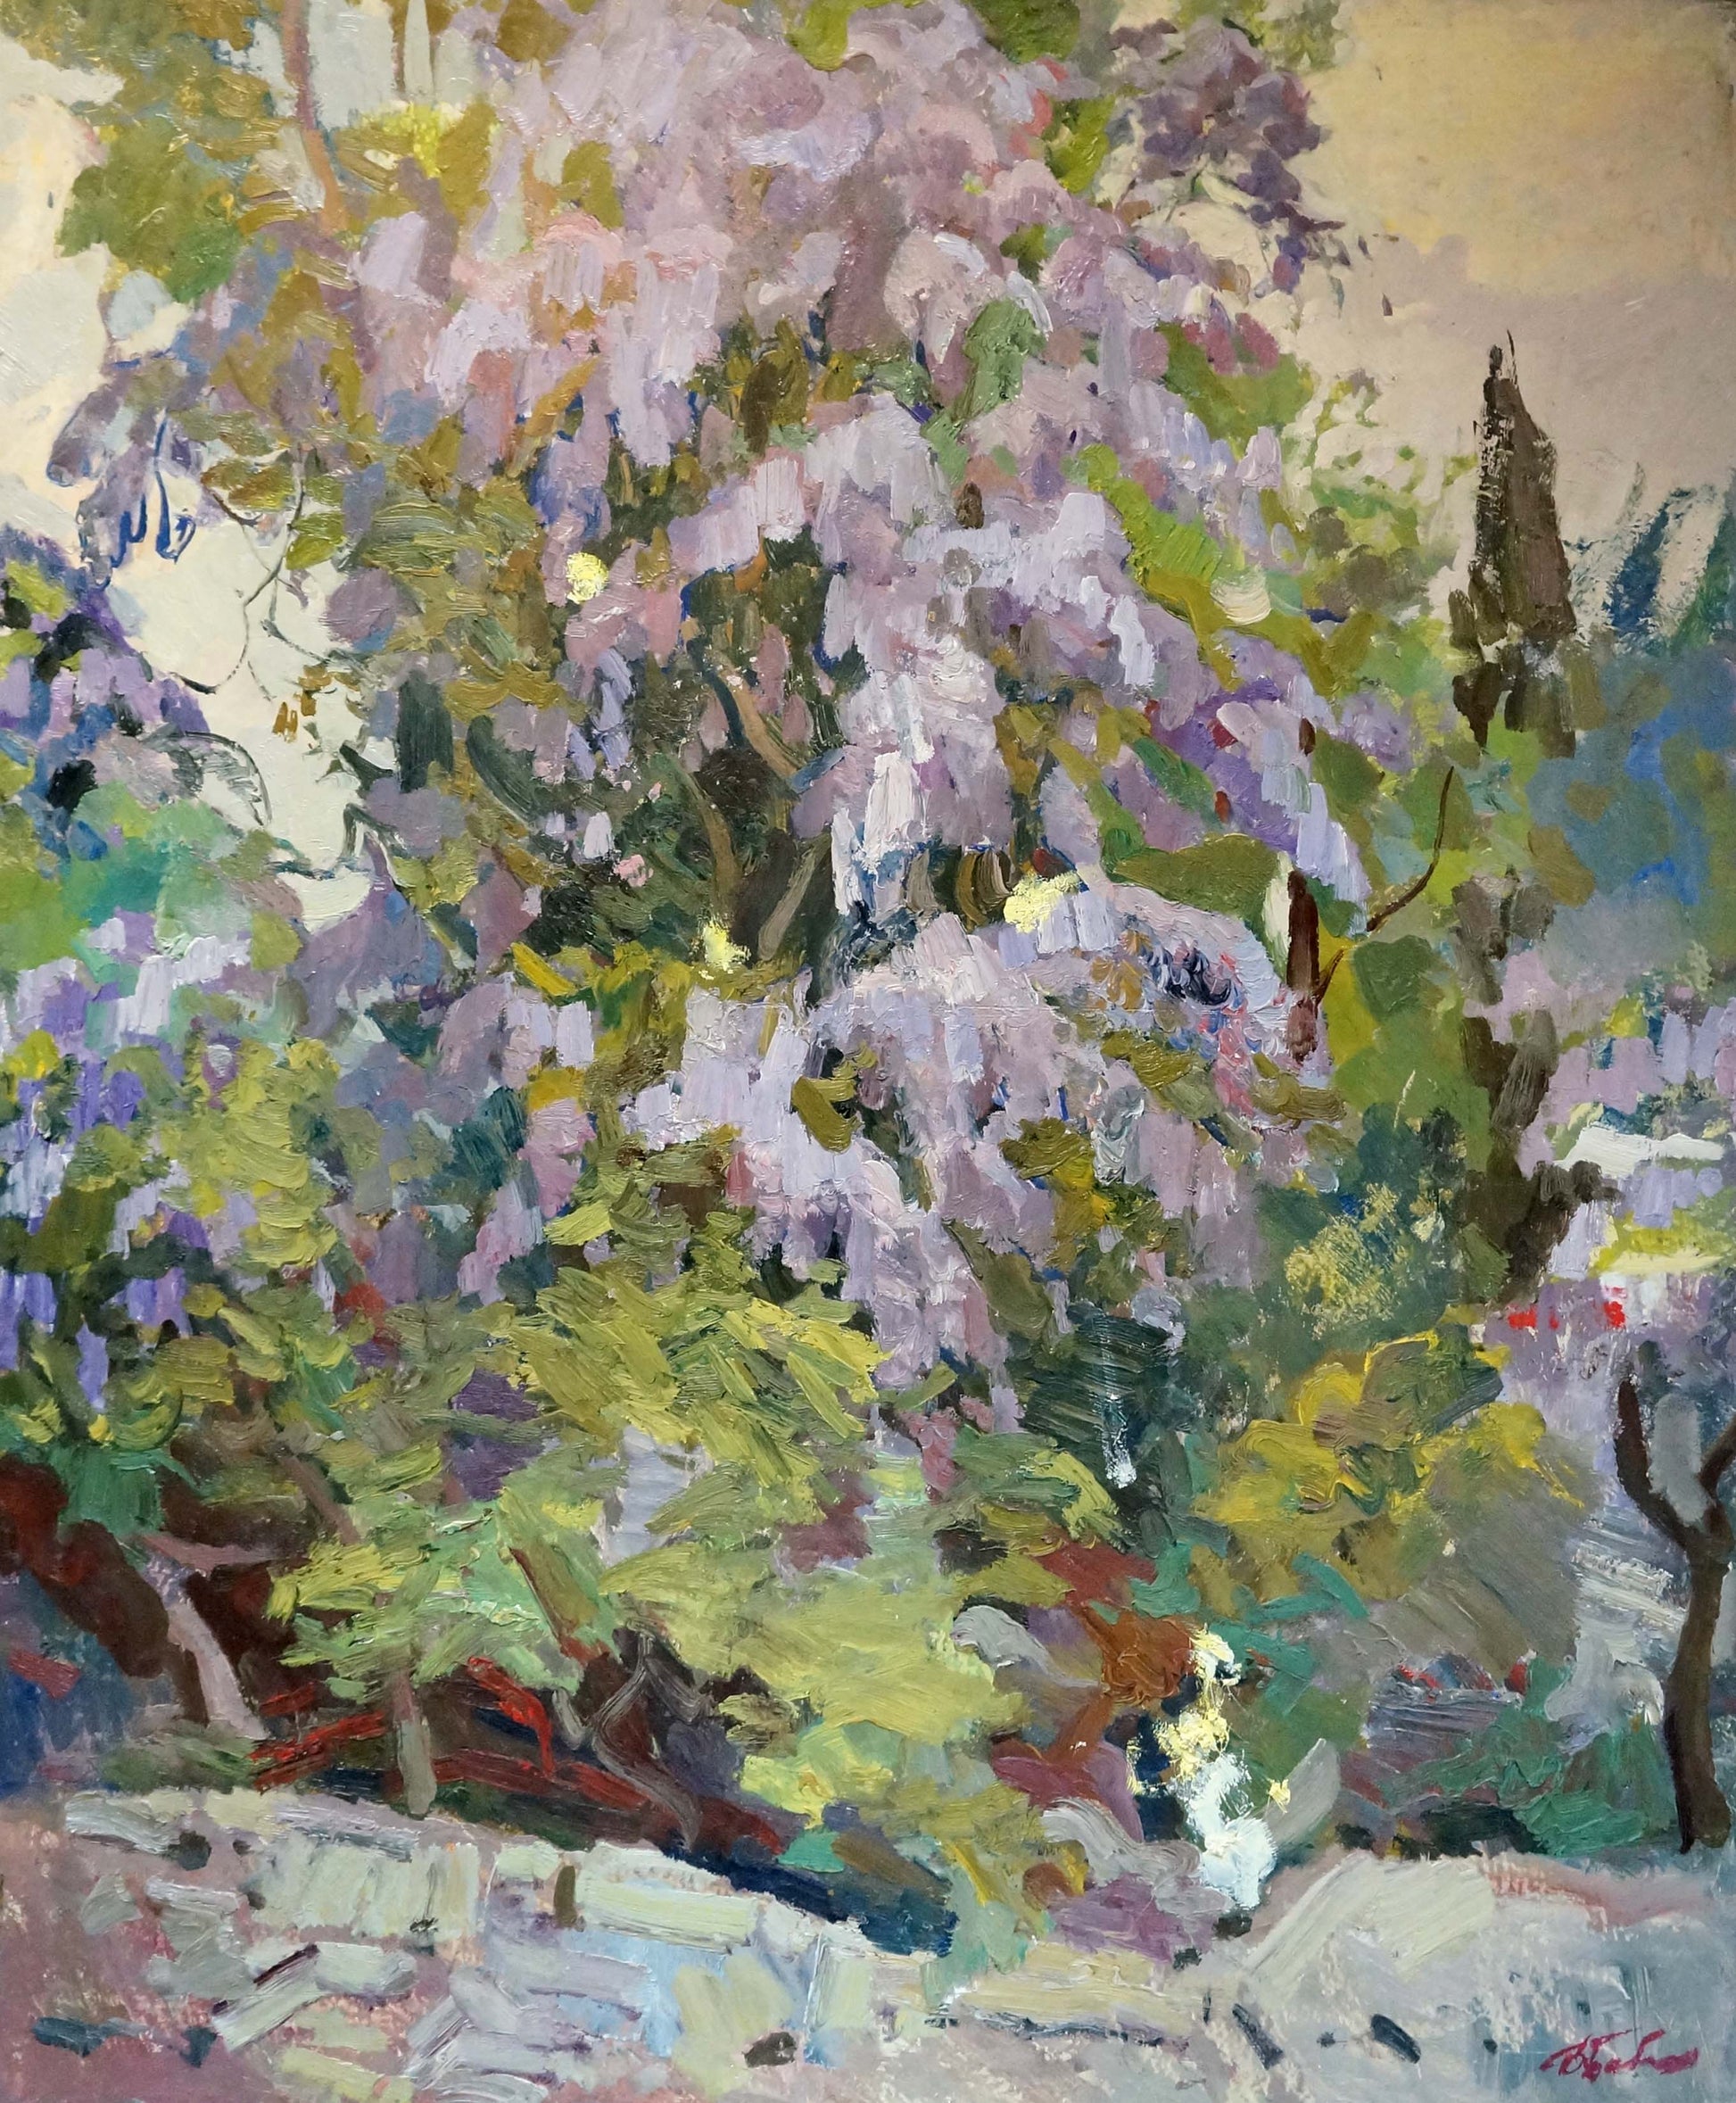 Flower Tree by Victor Vladimirovich Babentsov, an oil painting showcasing floral splendor.